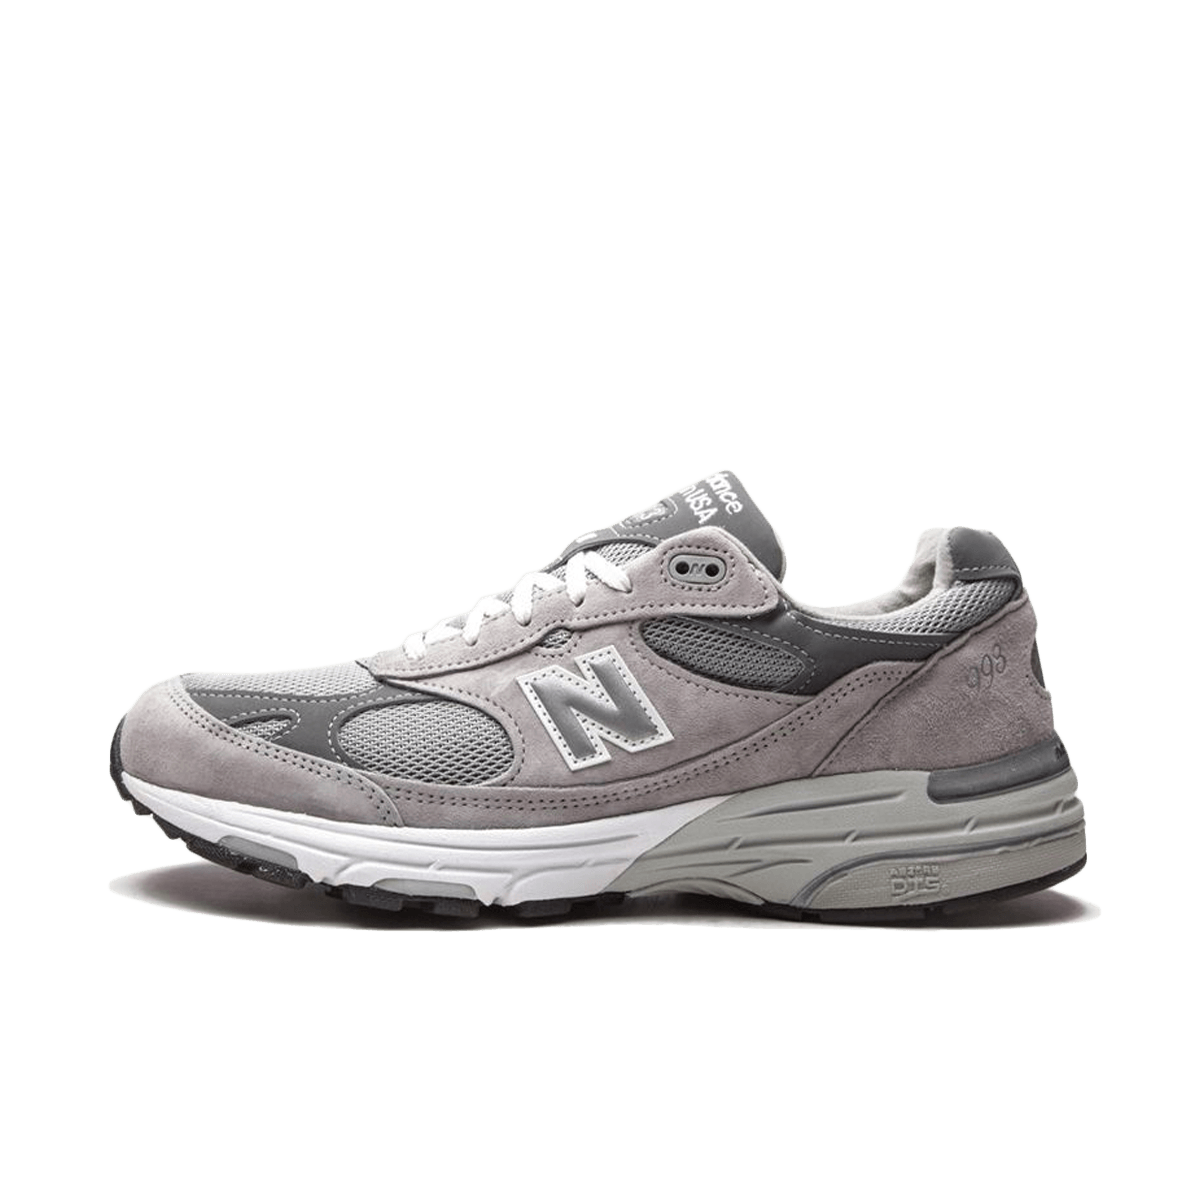 New Balance 993 "Grey'